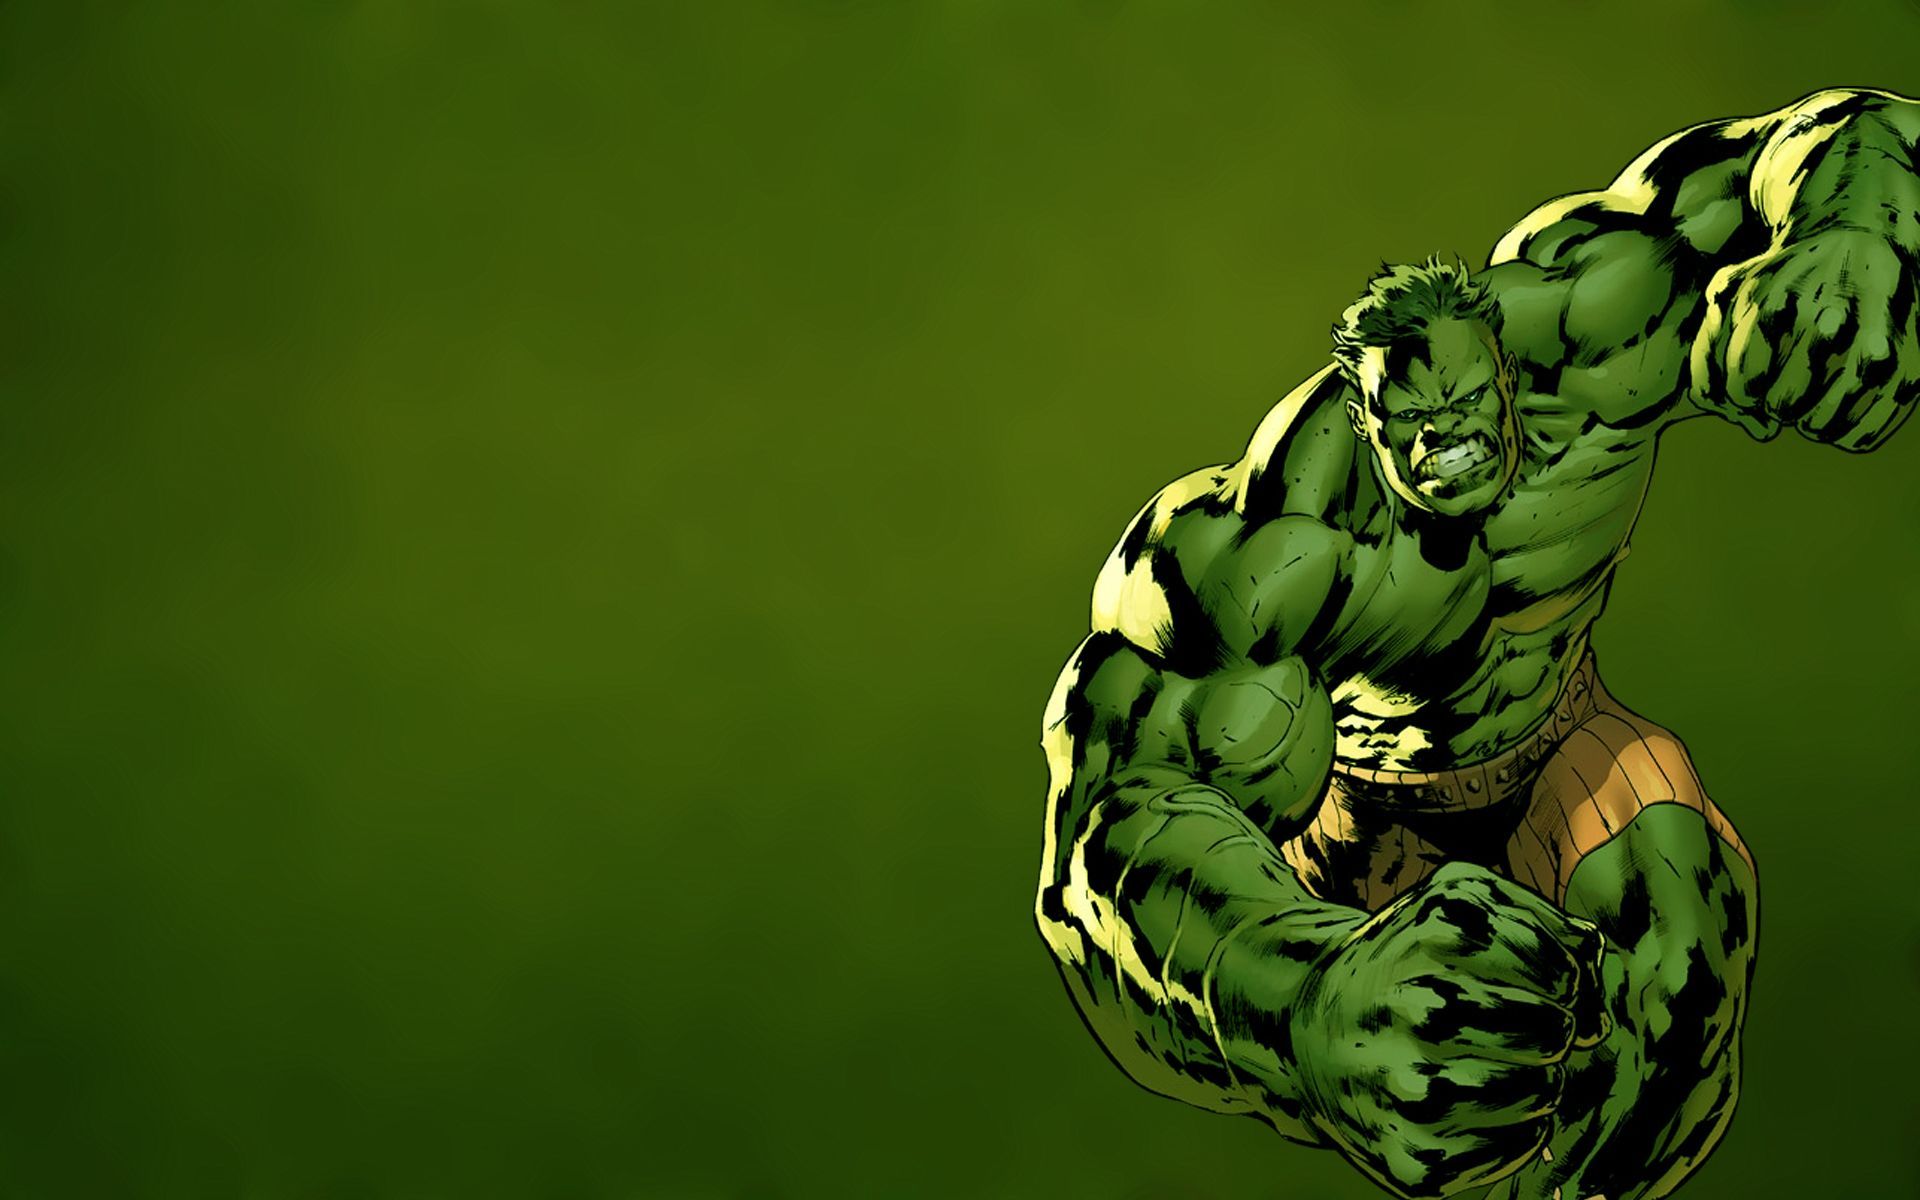 Incredible hulk background for desktop. Hulk, The incredibles